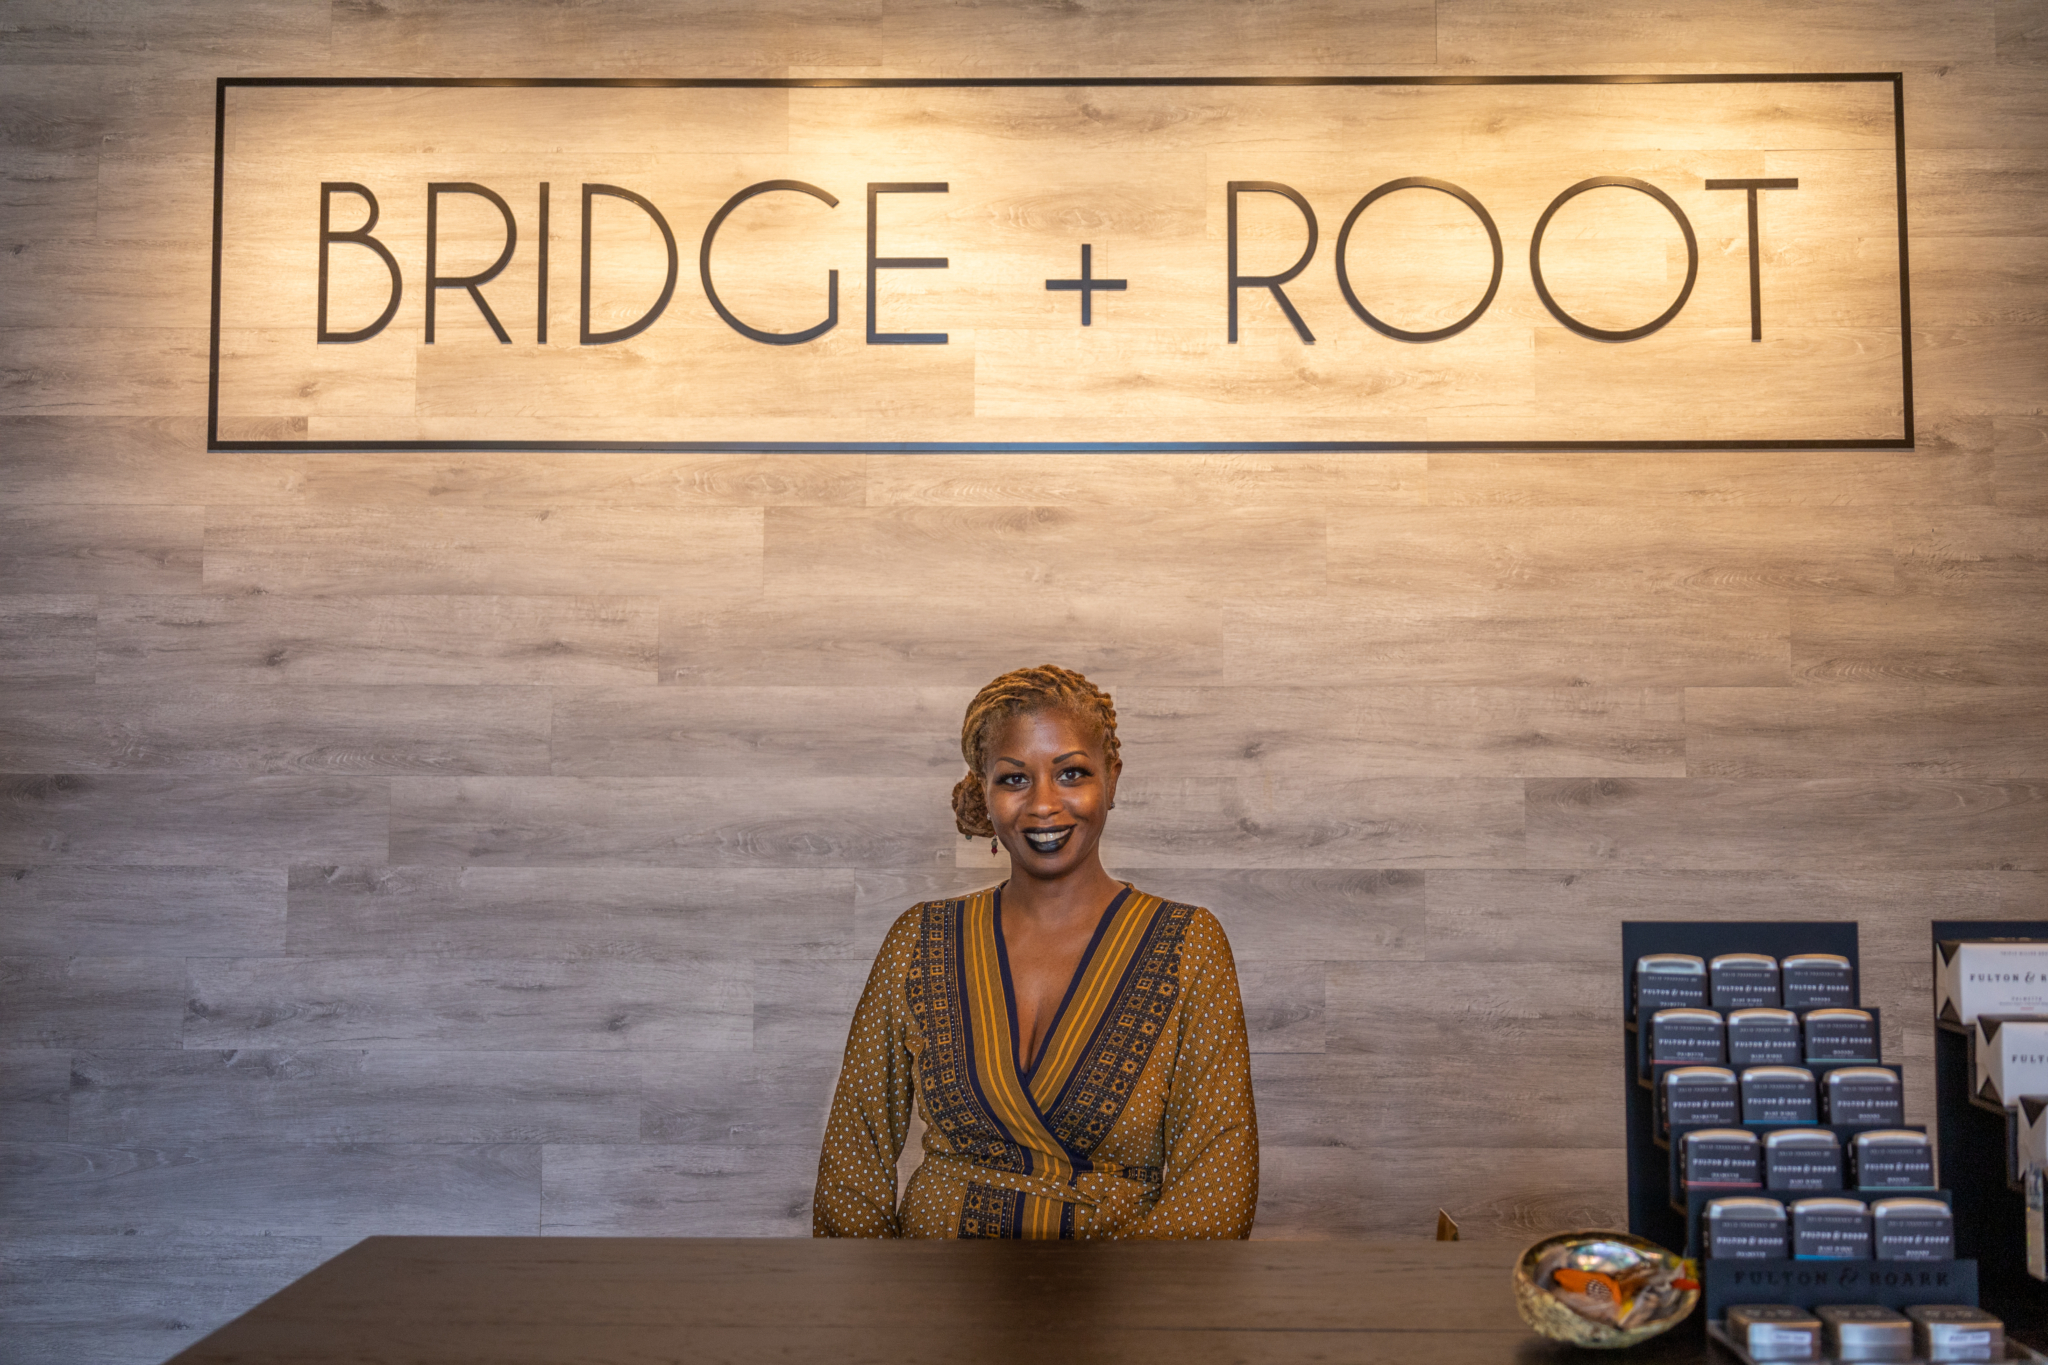 Woman standing behind desk with “Bridge + Root” logo behind her